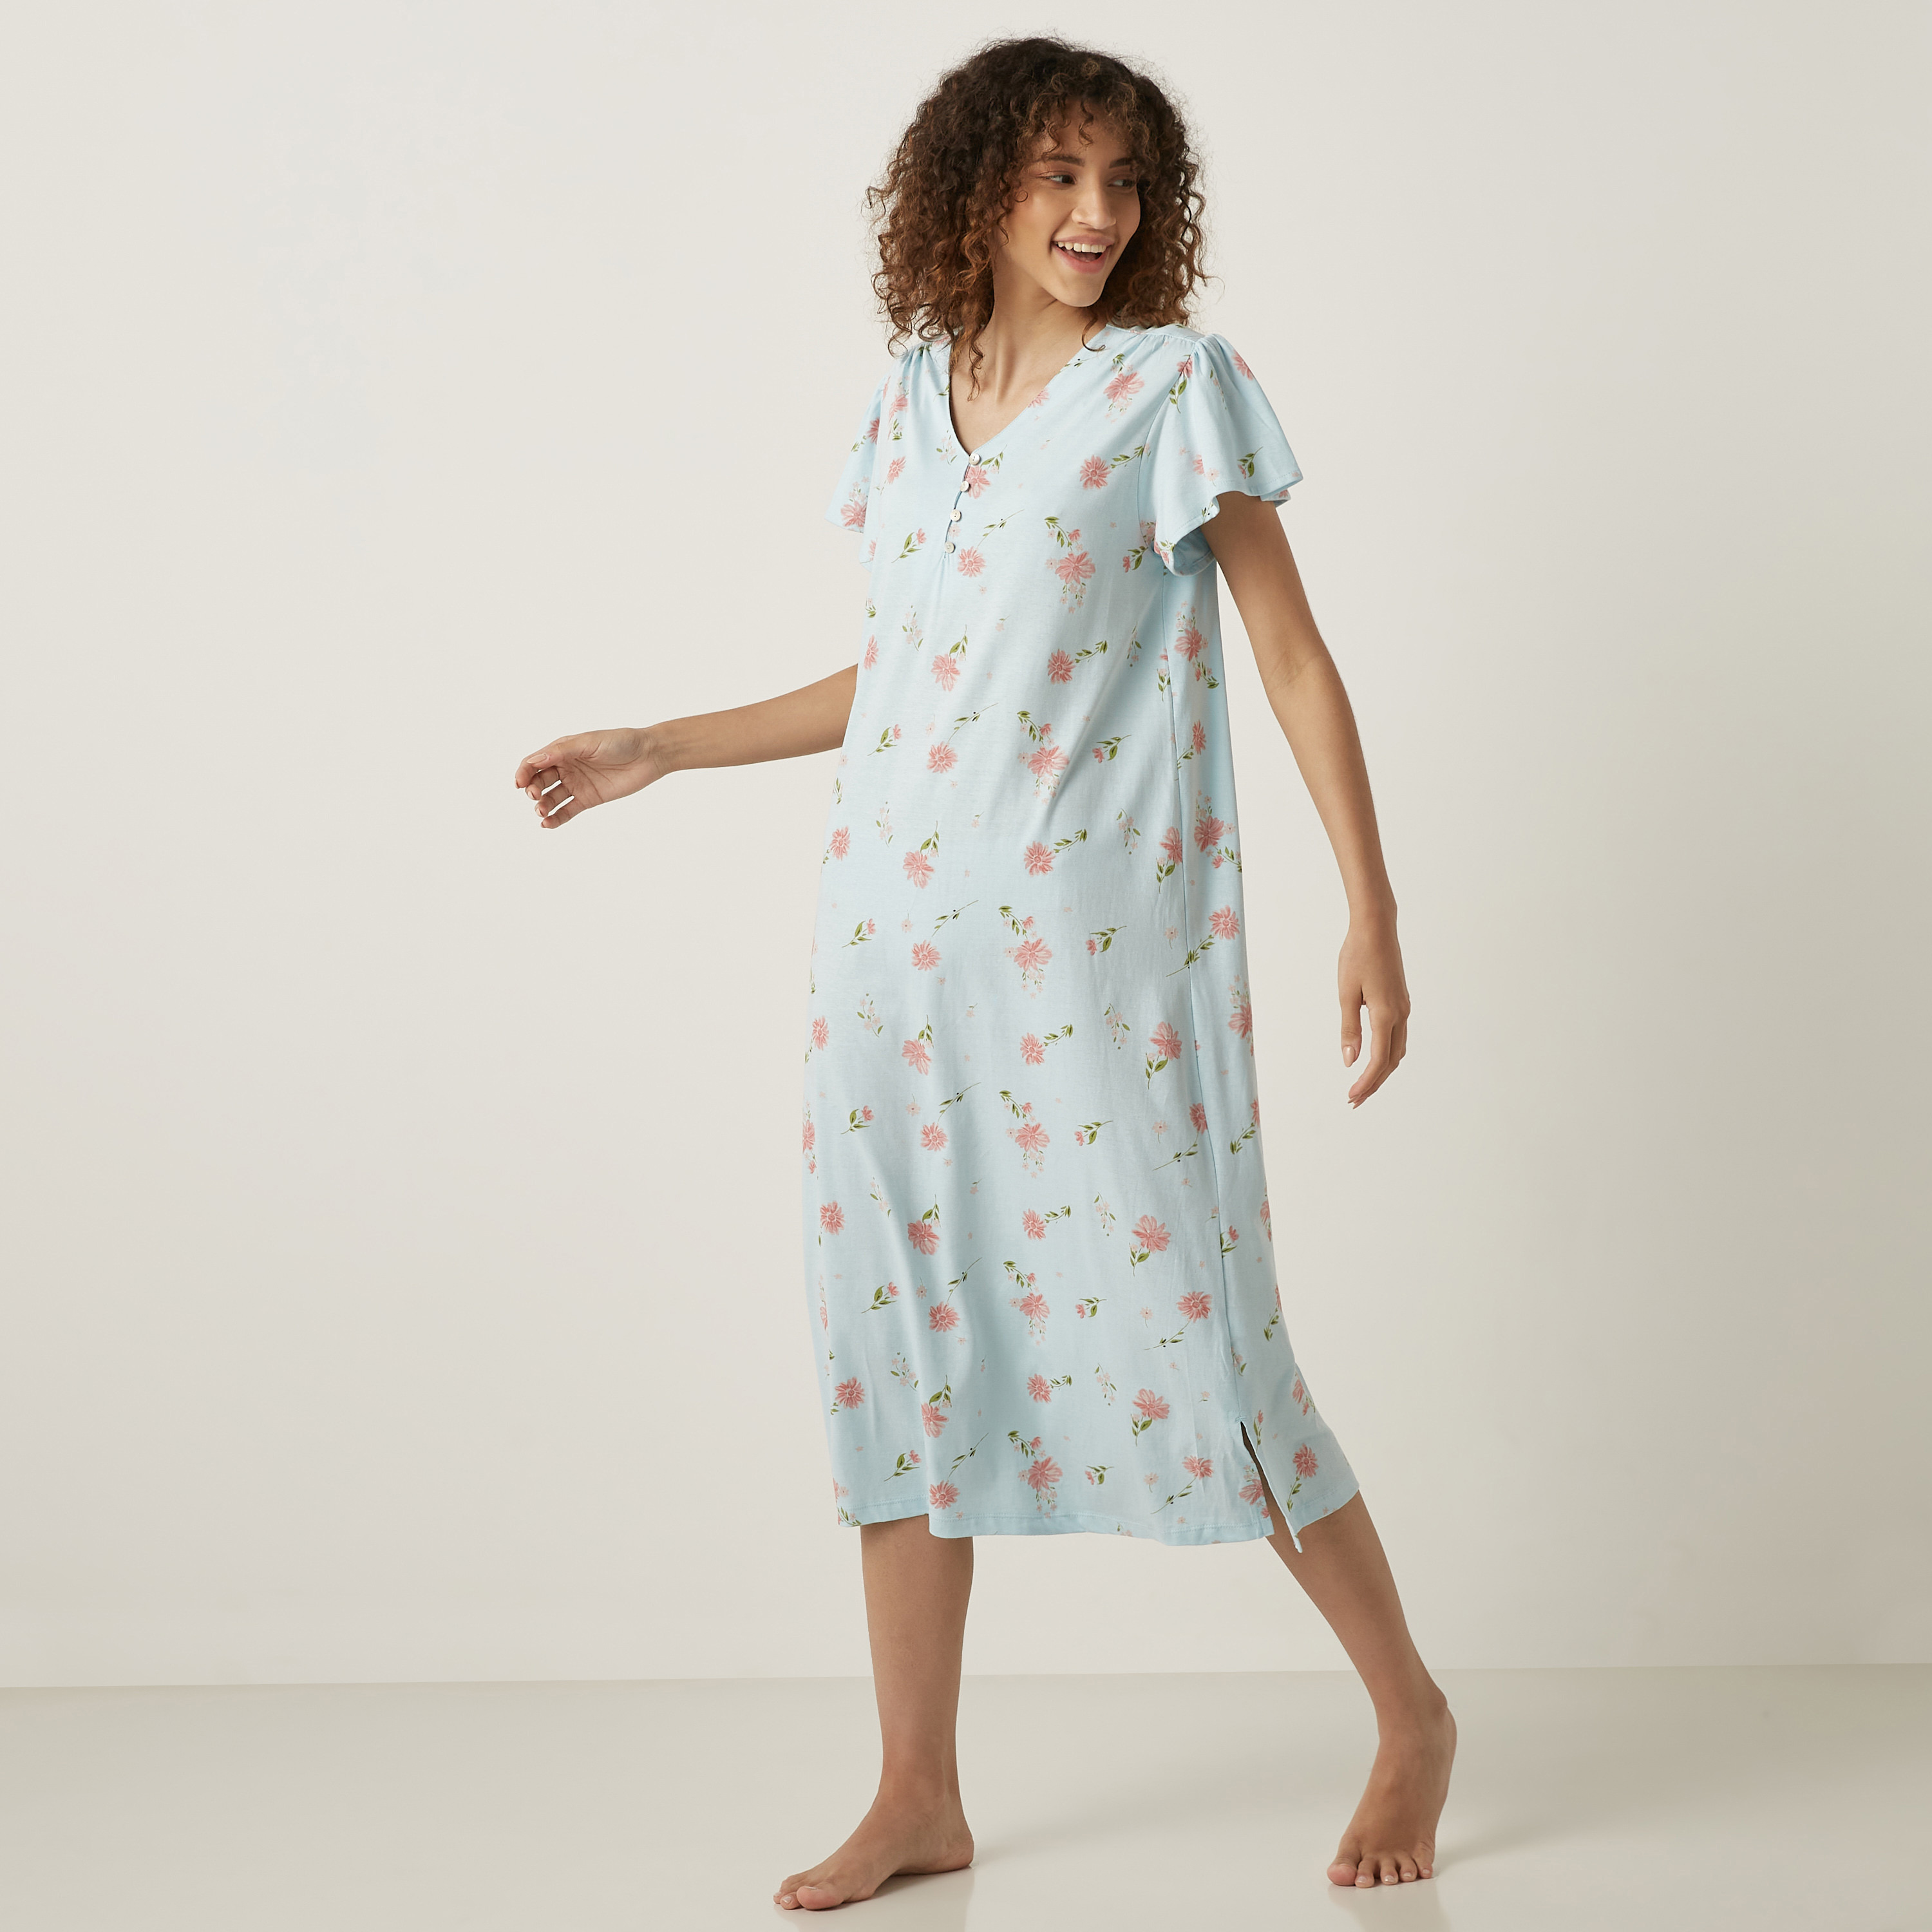 Home Dress Sleepwear | Night Gown Cotton | Sleep Dress | Nightgown |  Pyjamas - Summer - Aliexpress